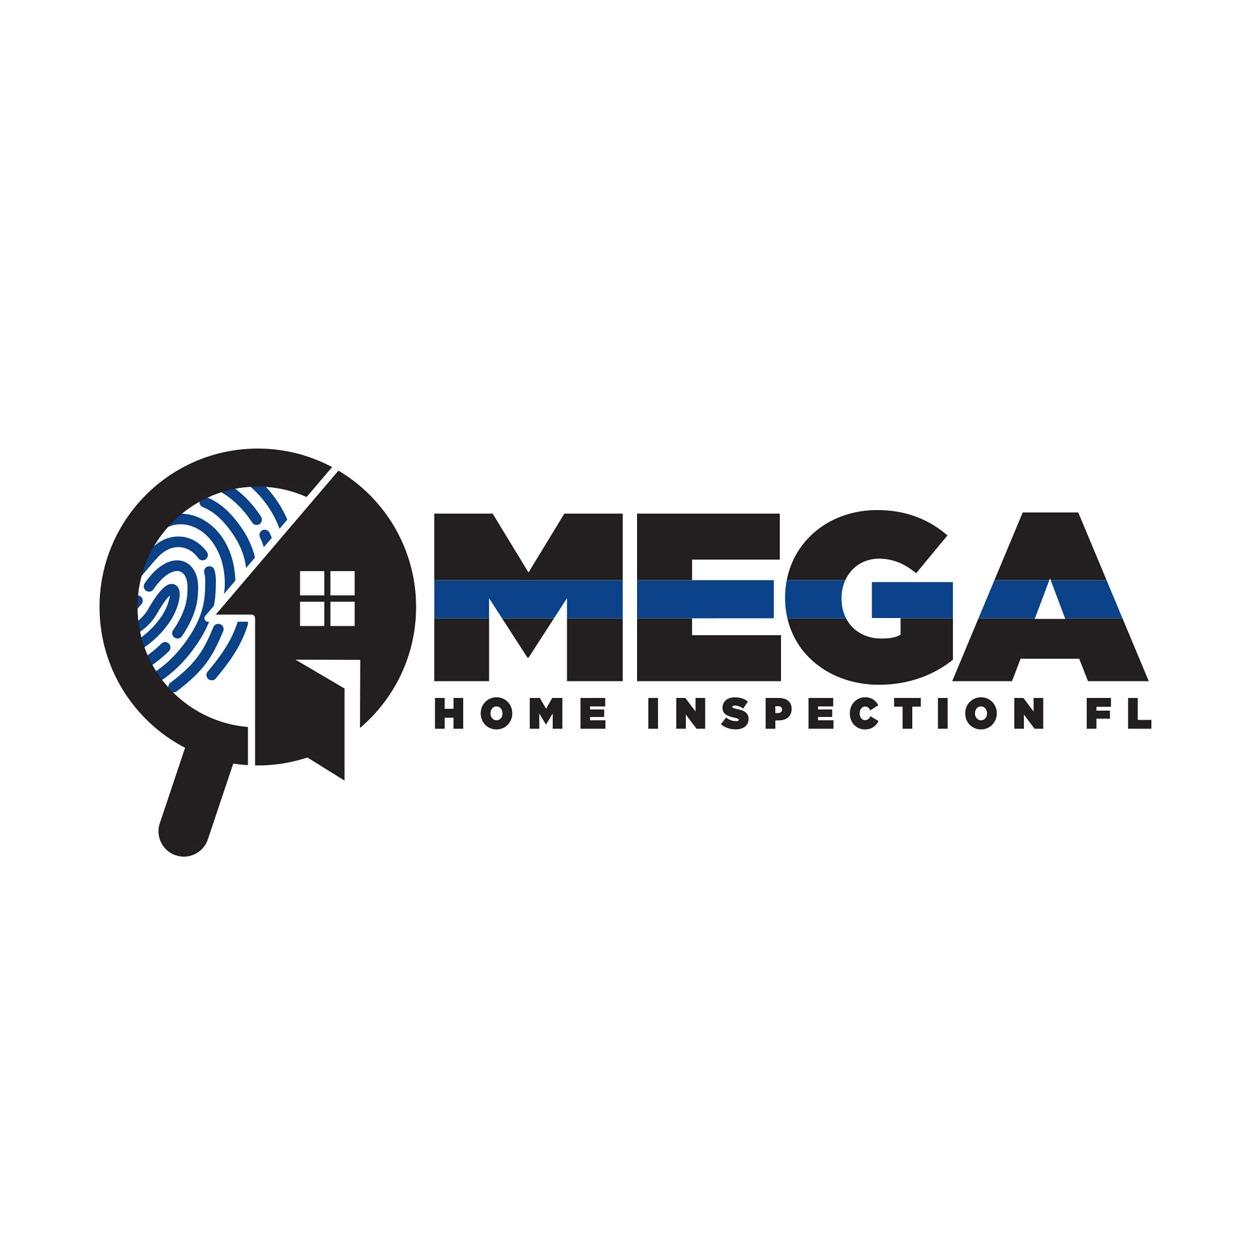 Omega Home Inspection FL Photo